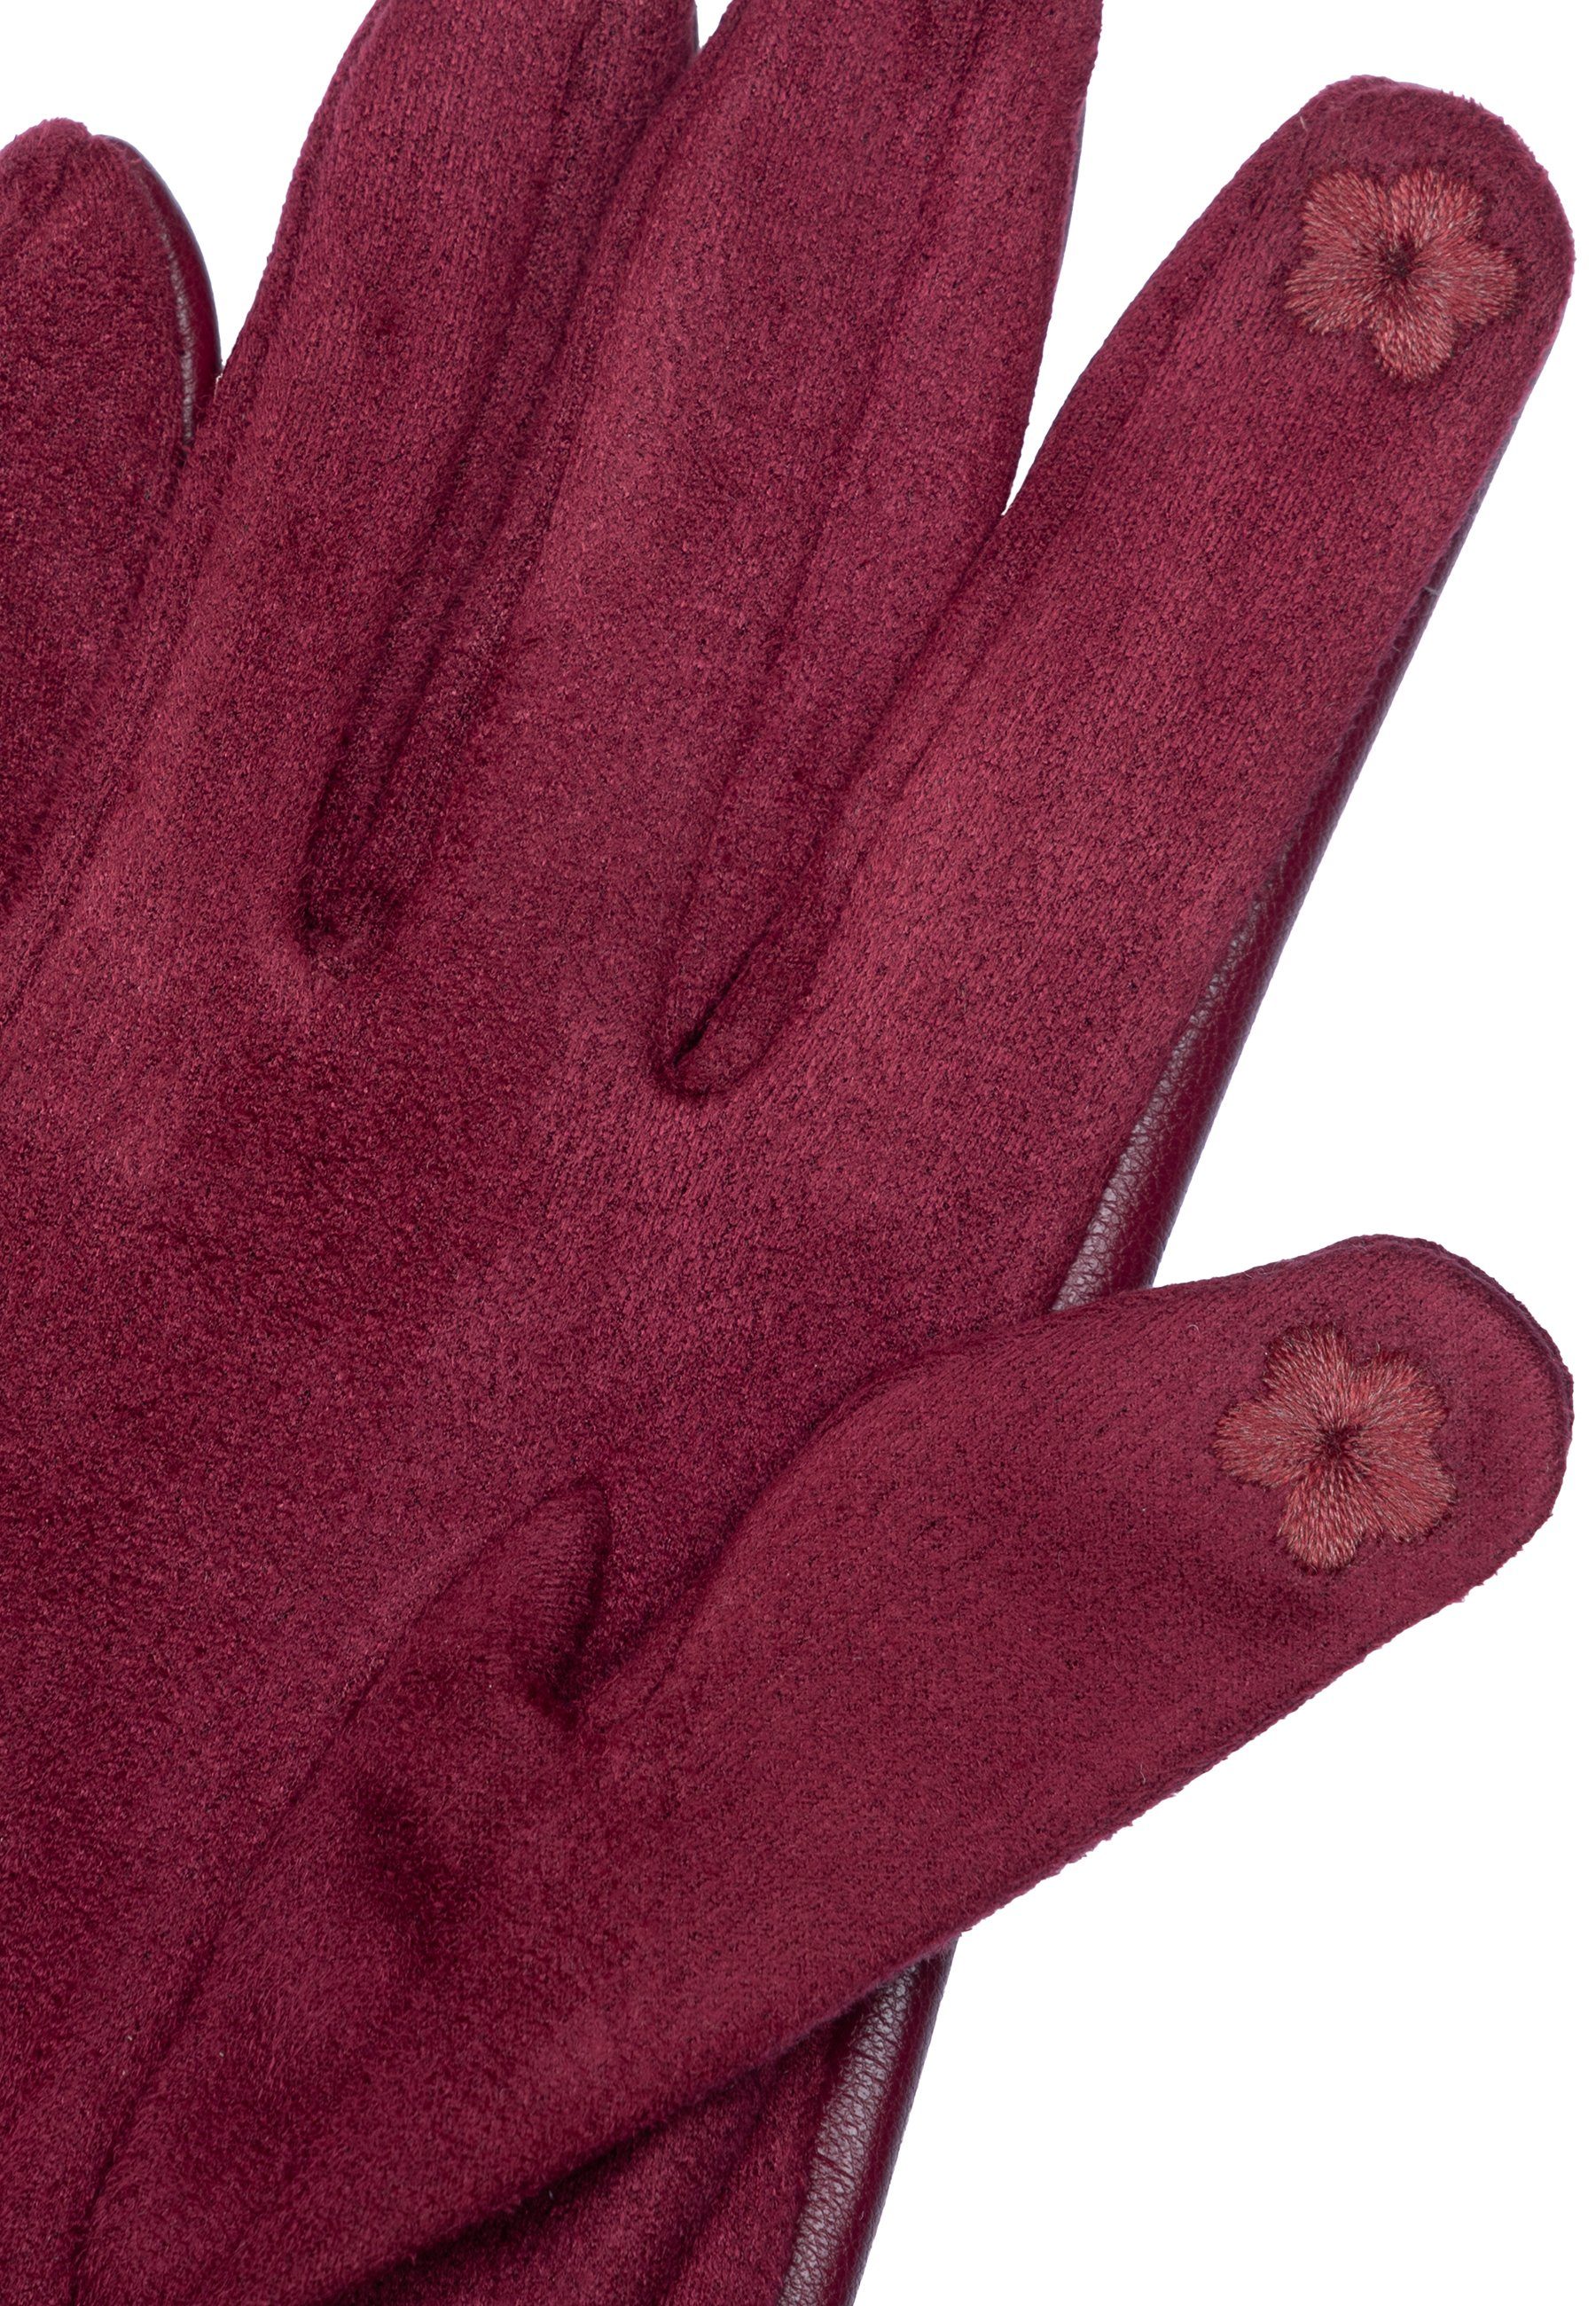 Caspar Strickhandschuhe GLV016 klassisch Damen elegante uni weinrot Handschuhe